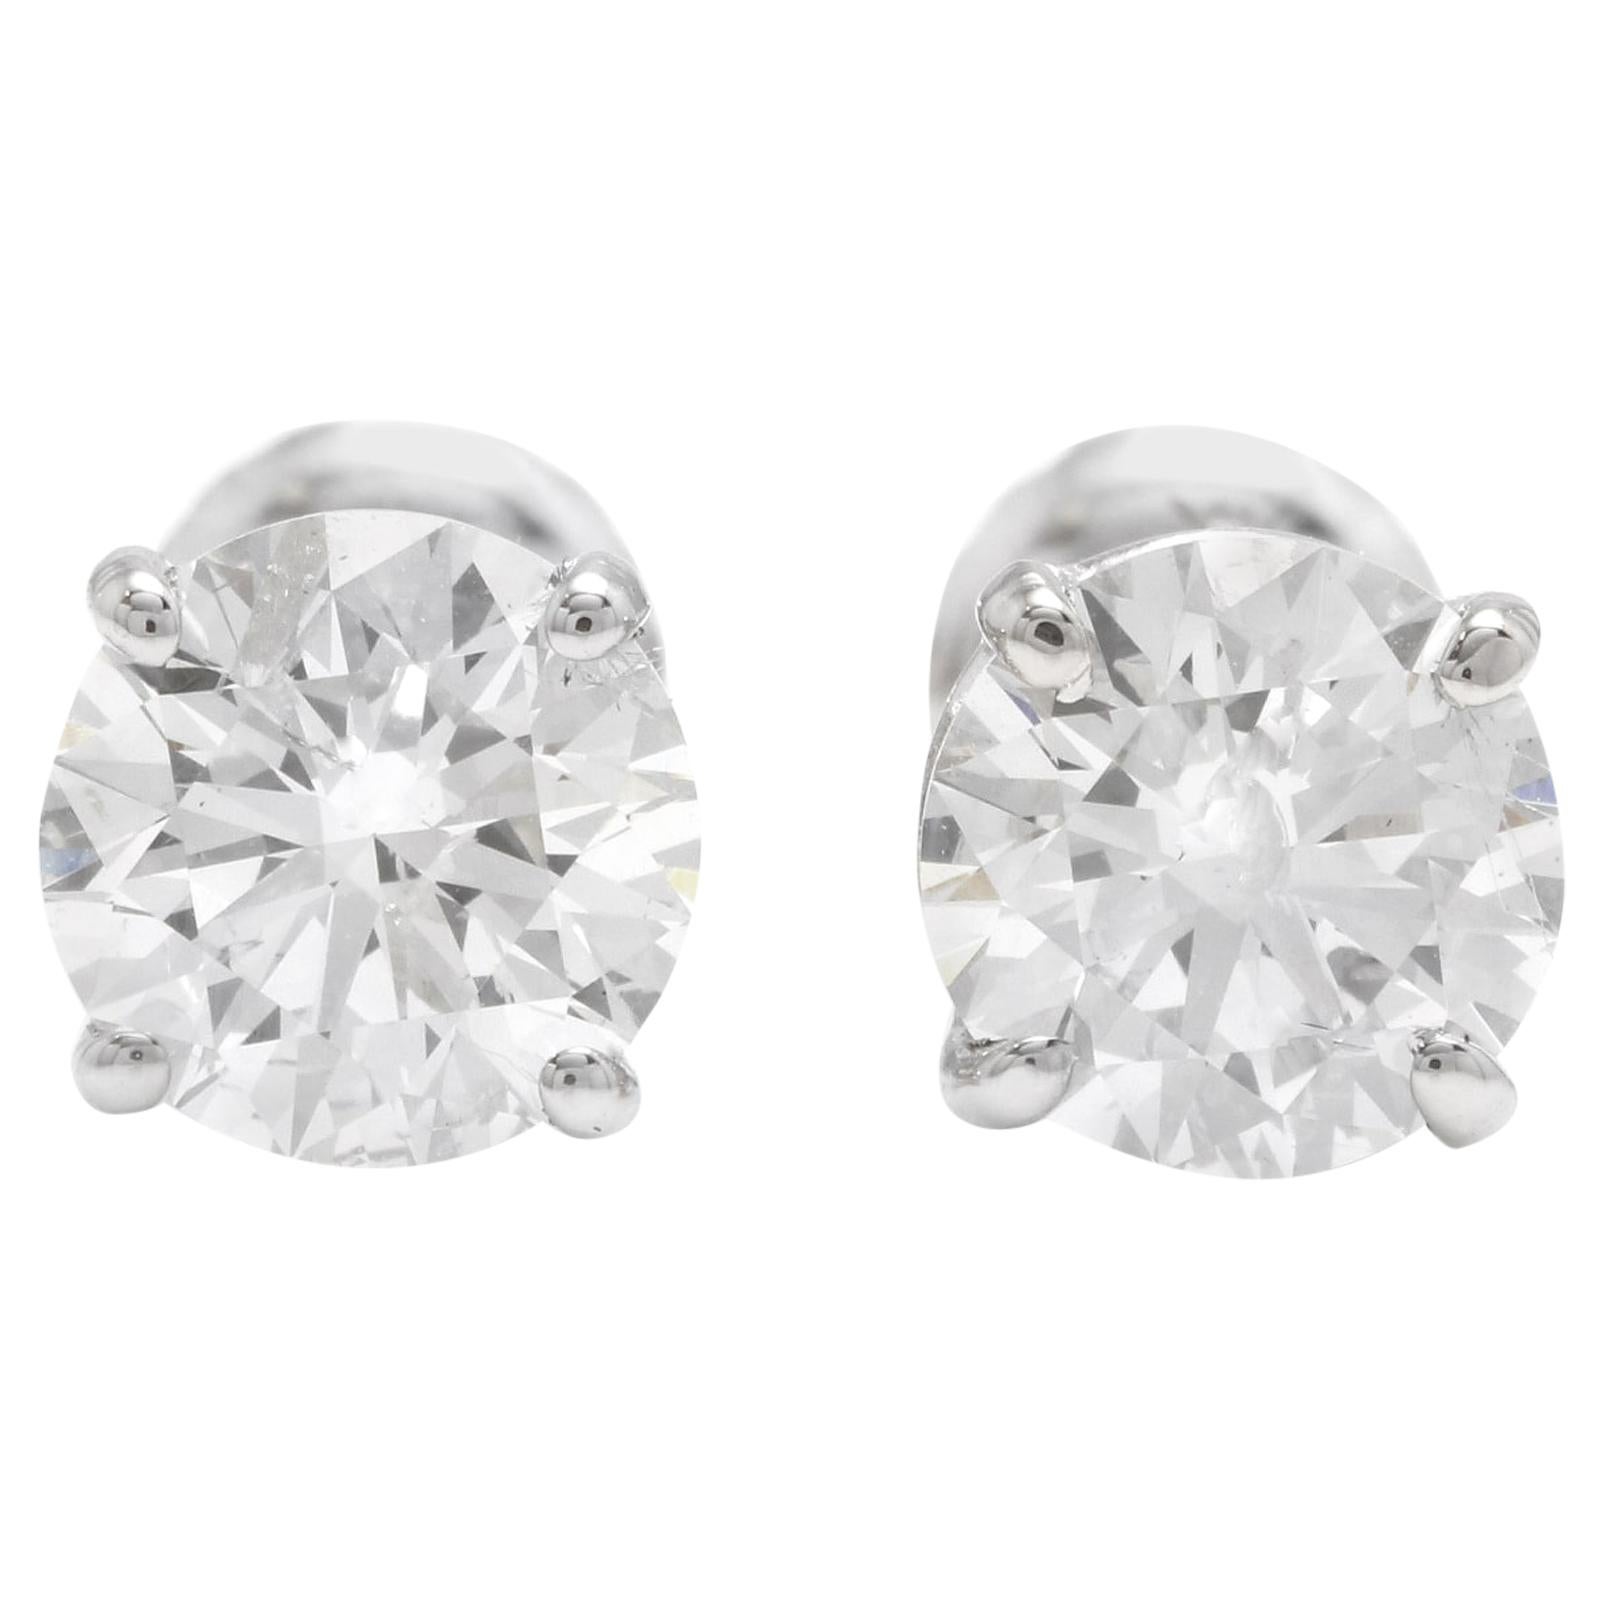 Exquisite 0.60 Carat Natural Diamond 14 Karat Solid White Gold Stud Earrings